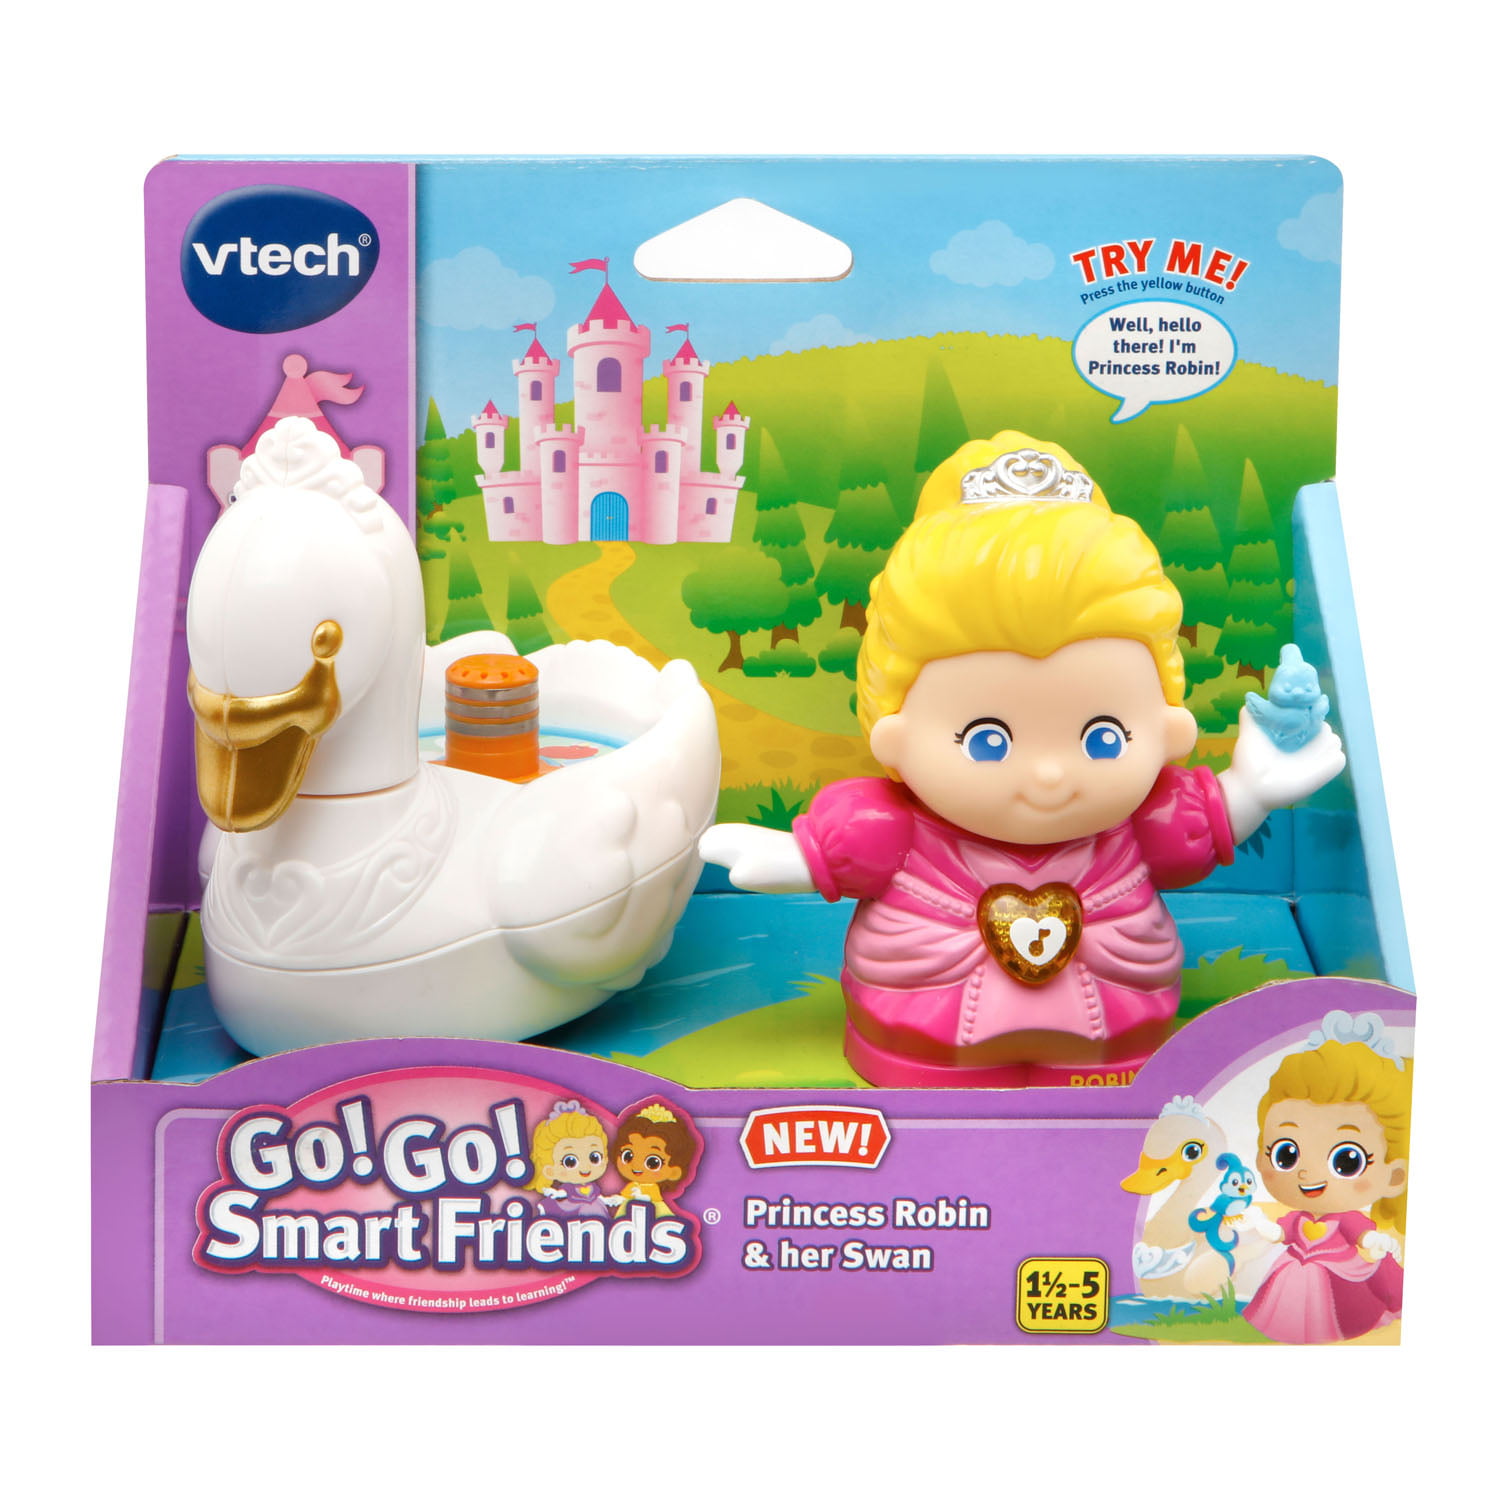 VTech Go Smart Friends Princess Robin and her Swan V Tech 80-176700 Go 